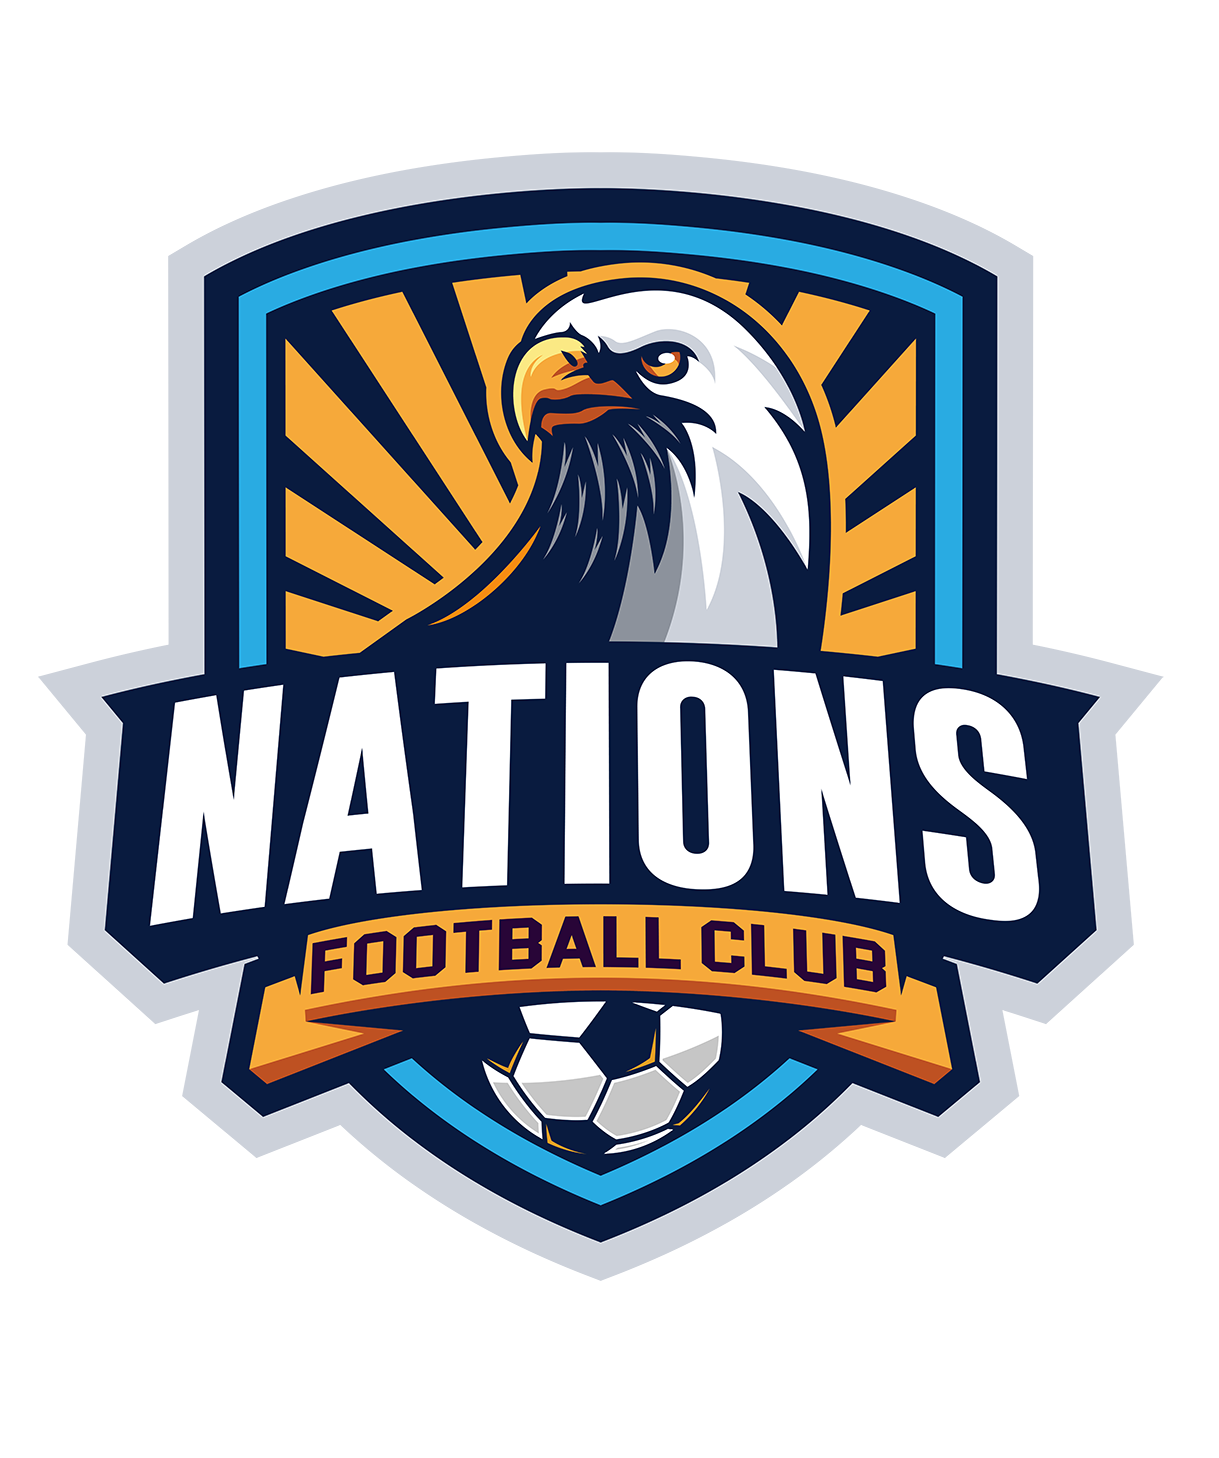 Nations Football Club